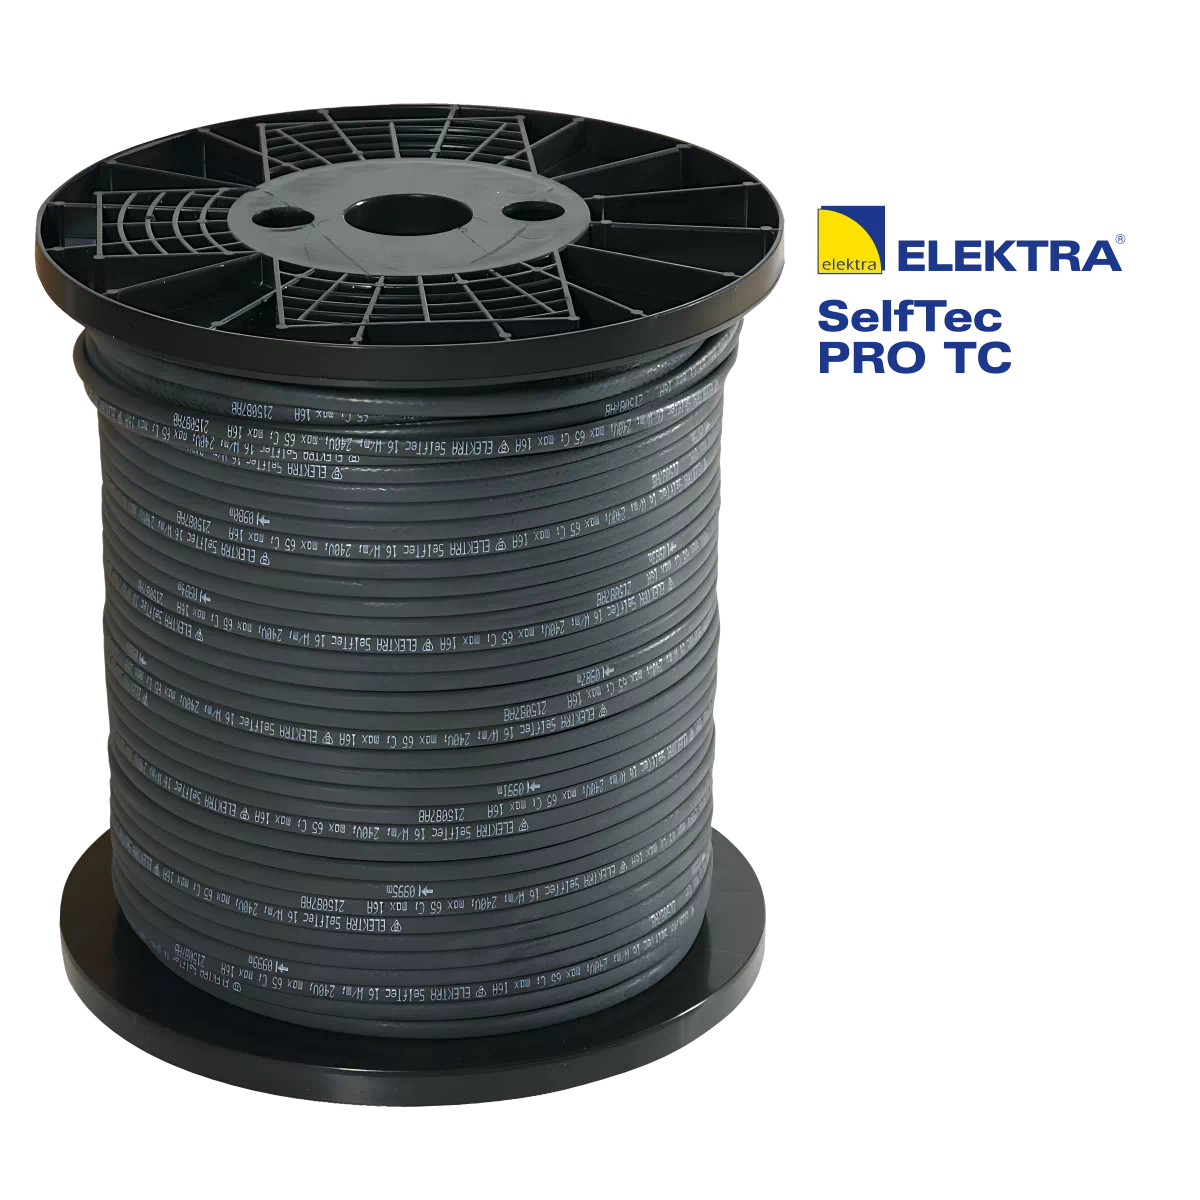 ELEKTRA-SelfTec-PRO-TC-Electric-Heating-Cable